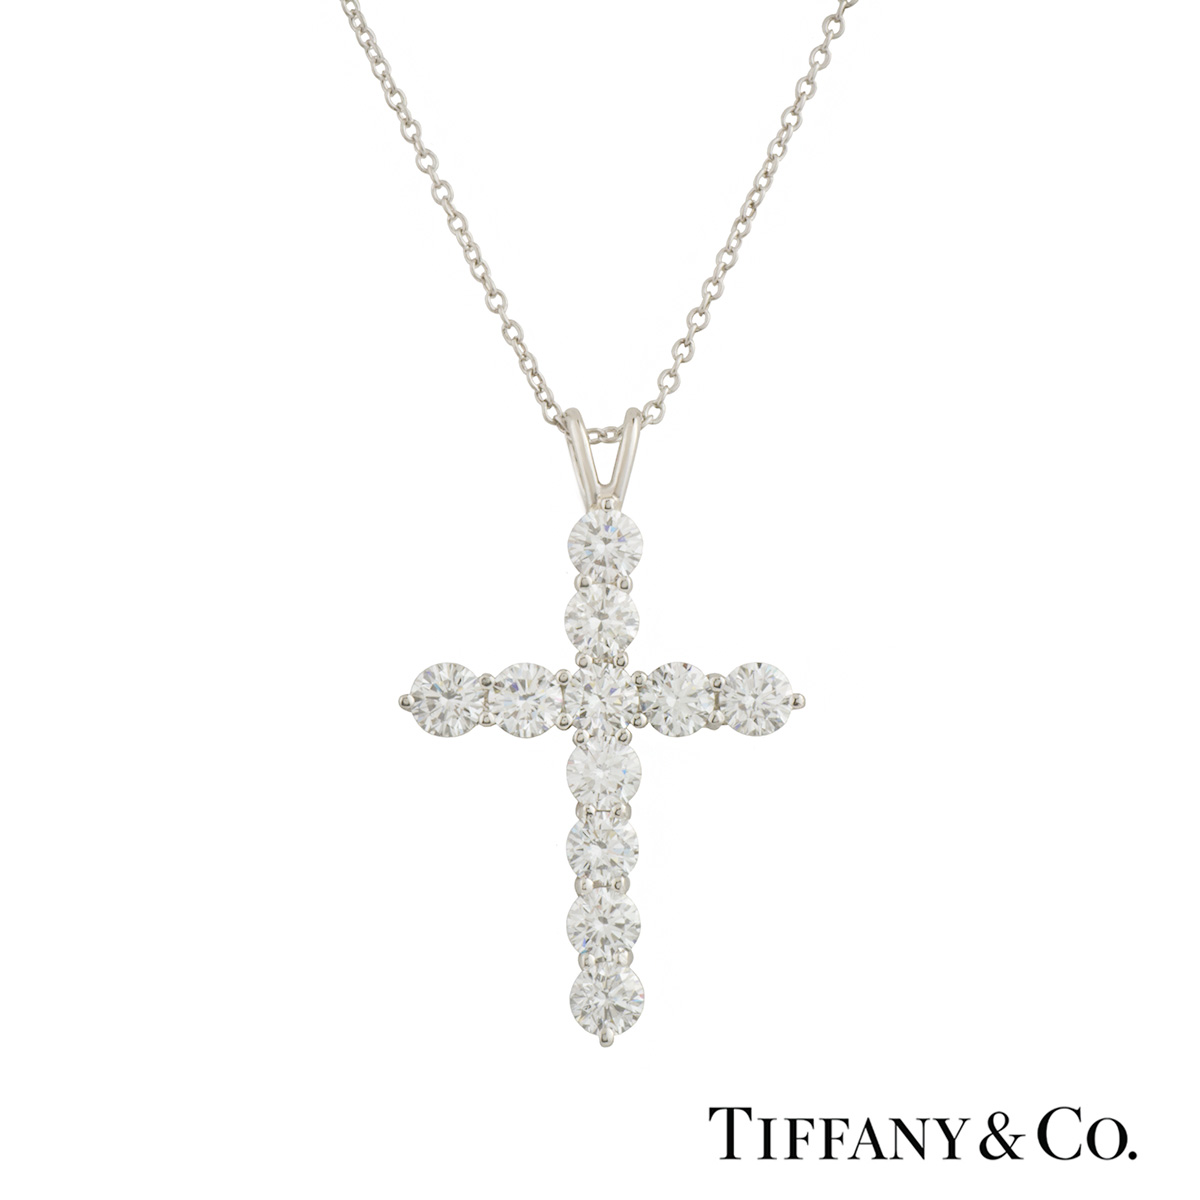 tiffany & co cross necklace